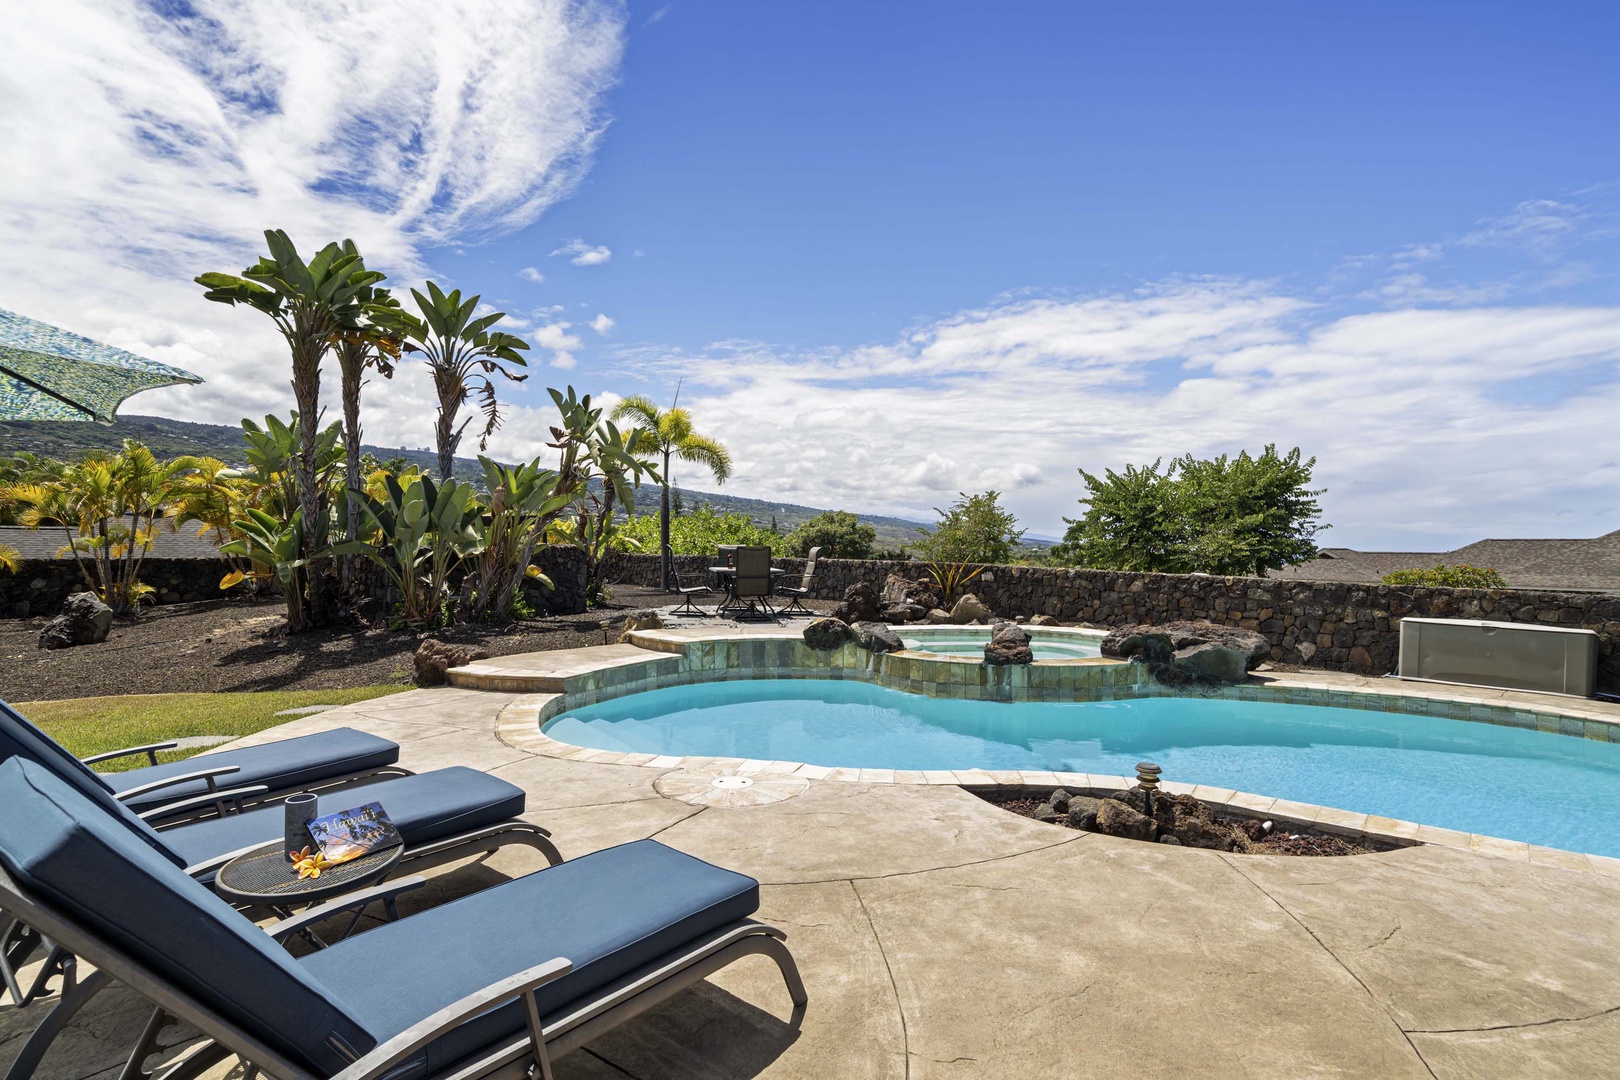 Kailua Kona Vacation Rentals, Kahakai Estates Hale - Relaxation, served poolside